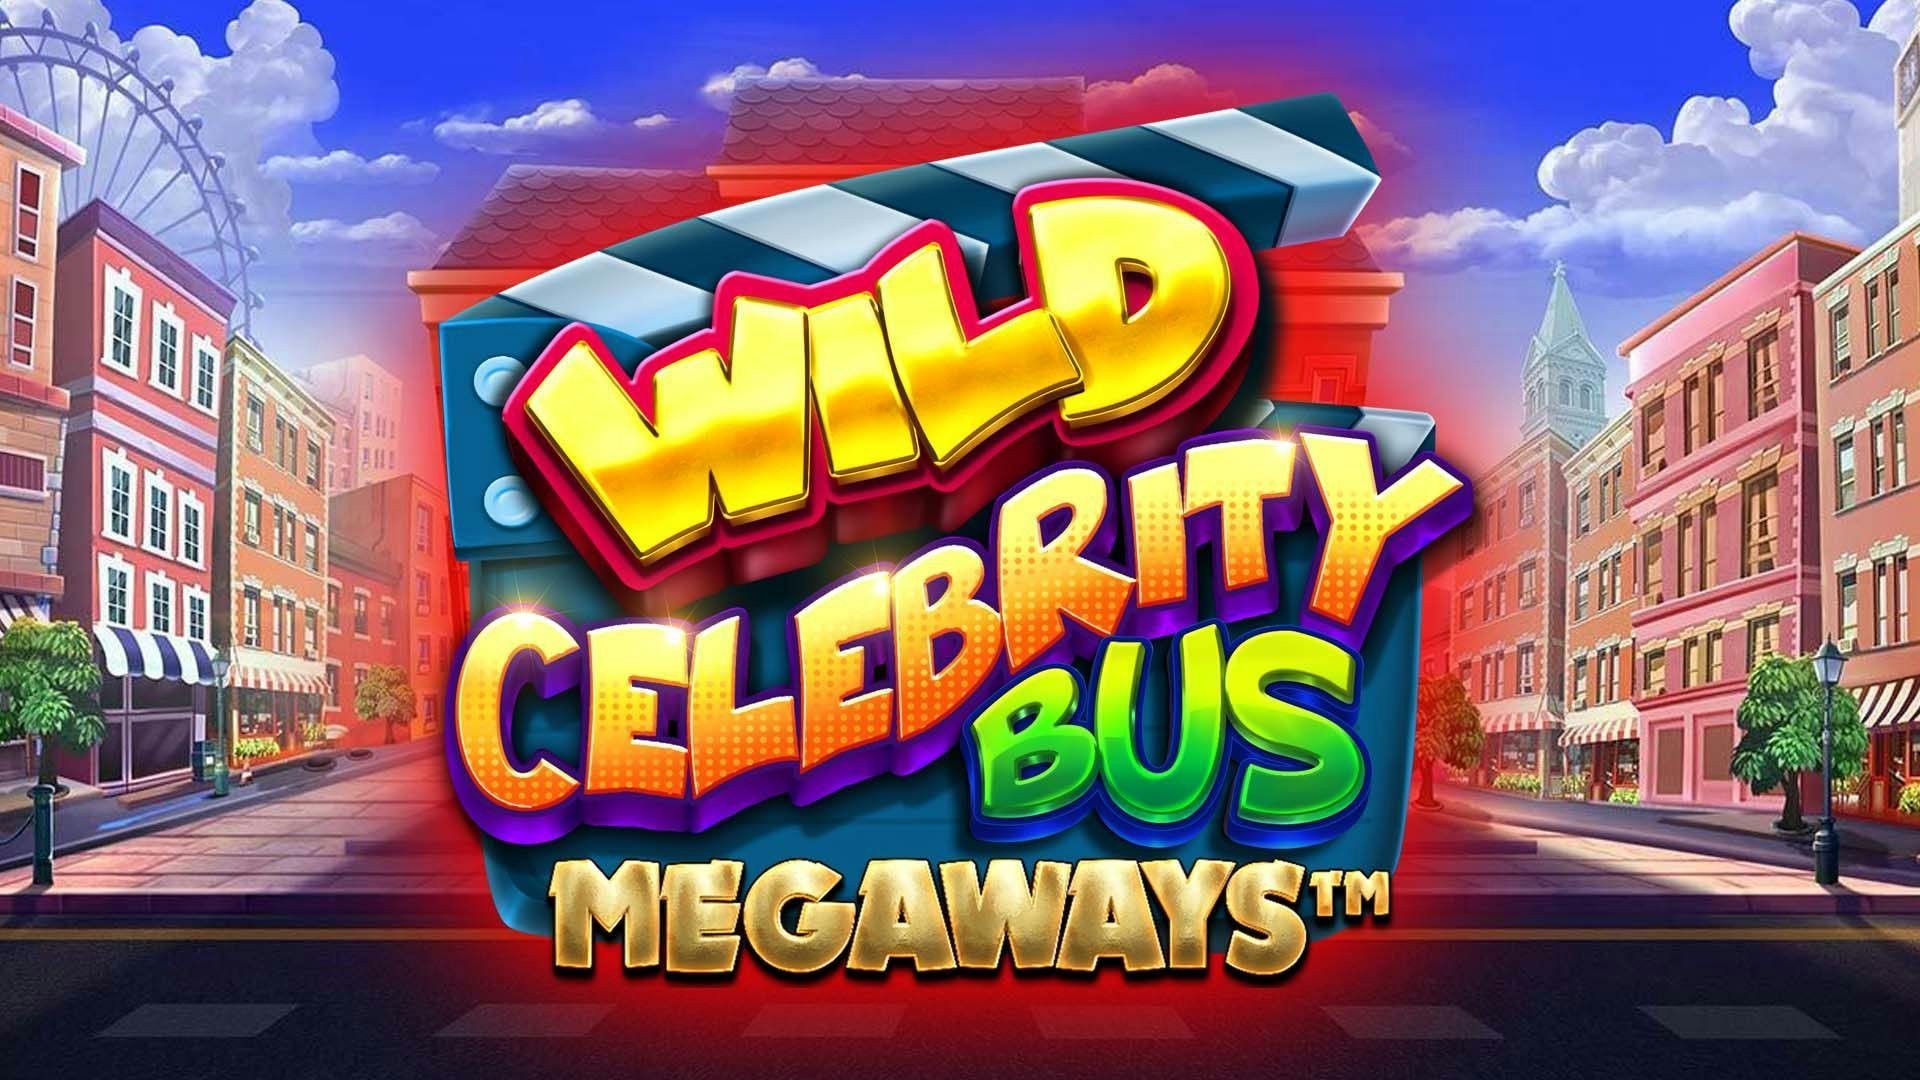 Wild Celebrity Bus Megaways Slot Machine Online Free Game Play